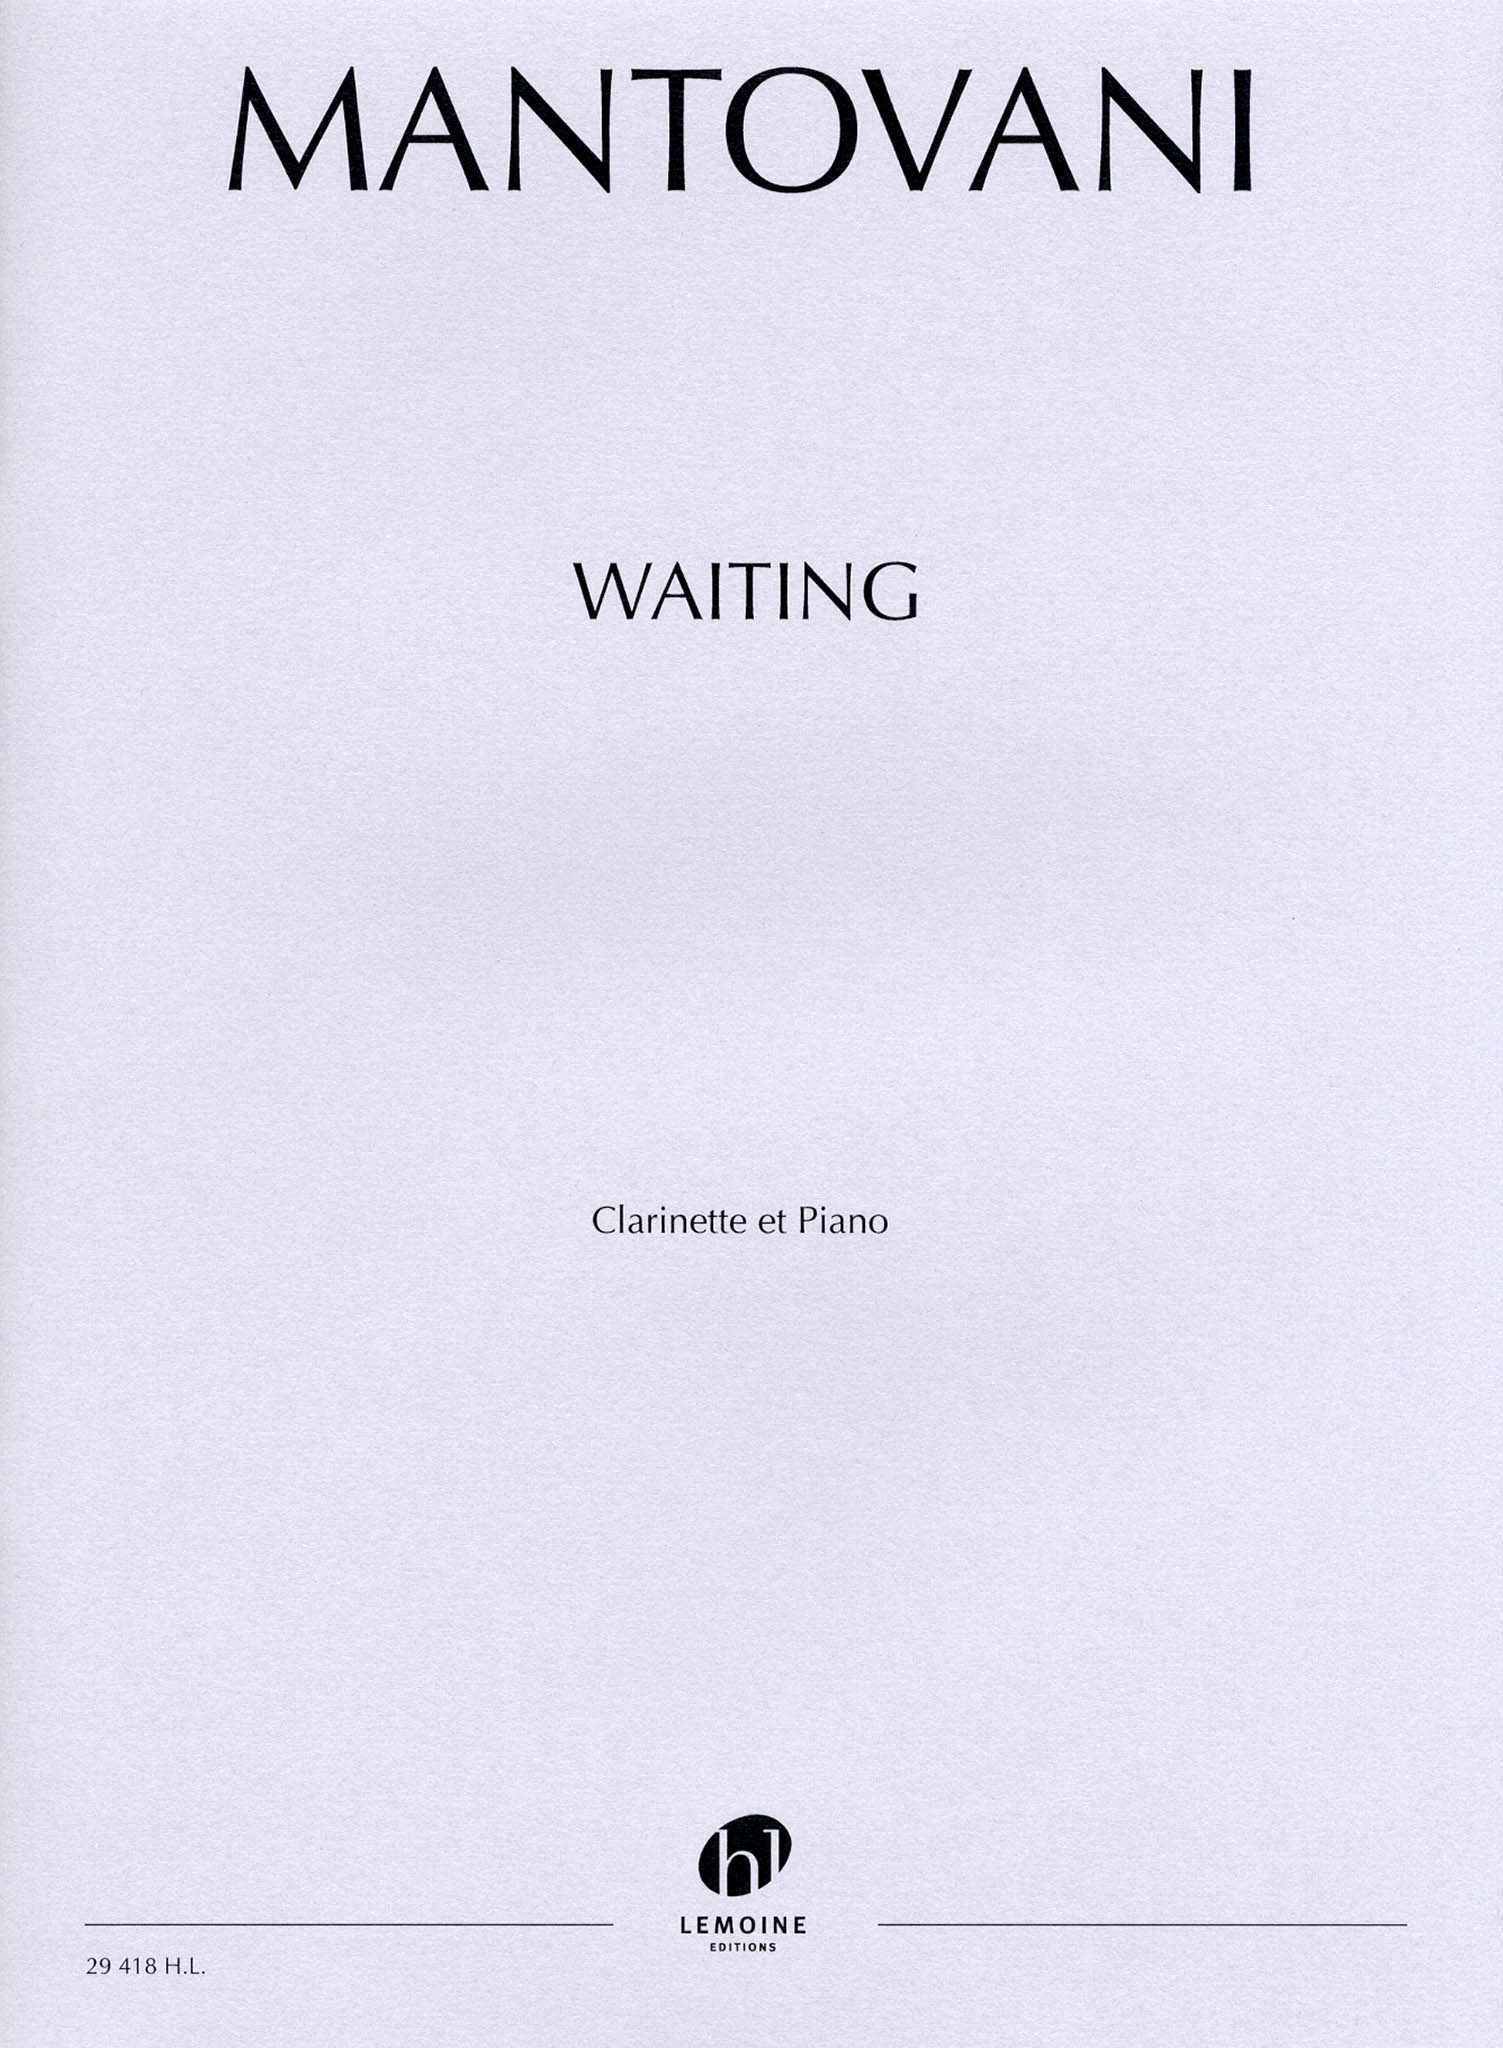 Mantovani Waiting for clarinet & piano cover